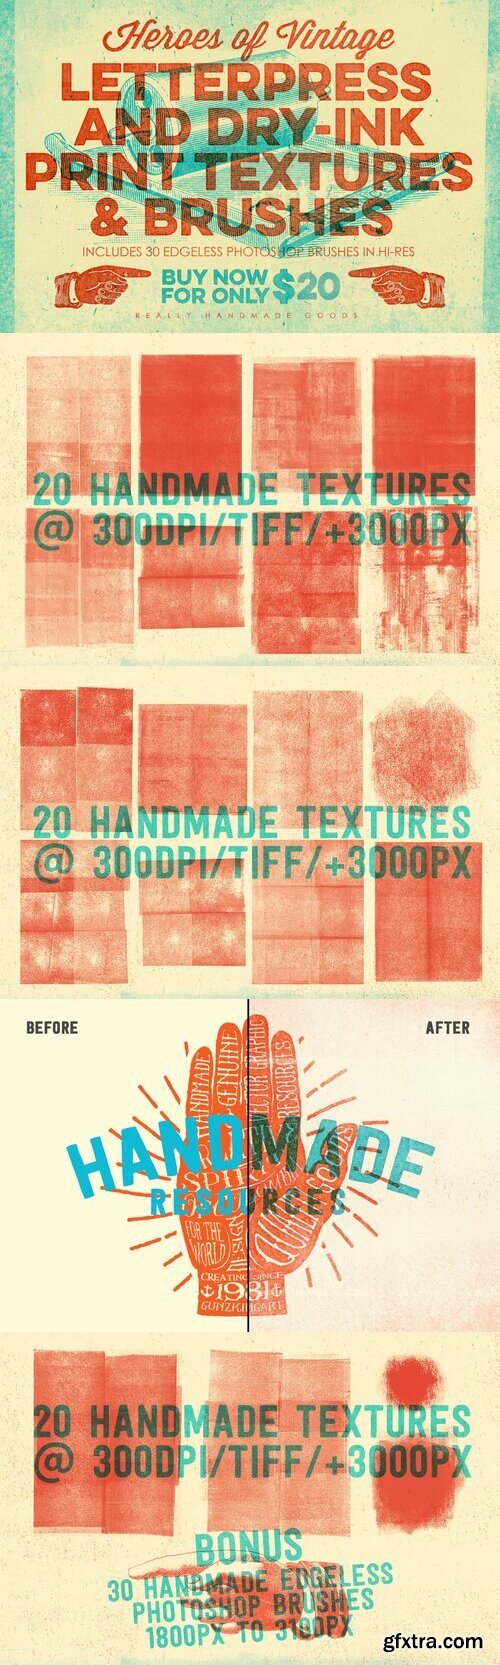 Letterpress & Dry-Ink Print Textures